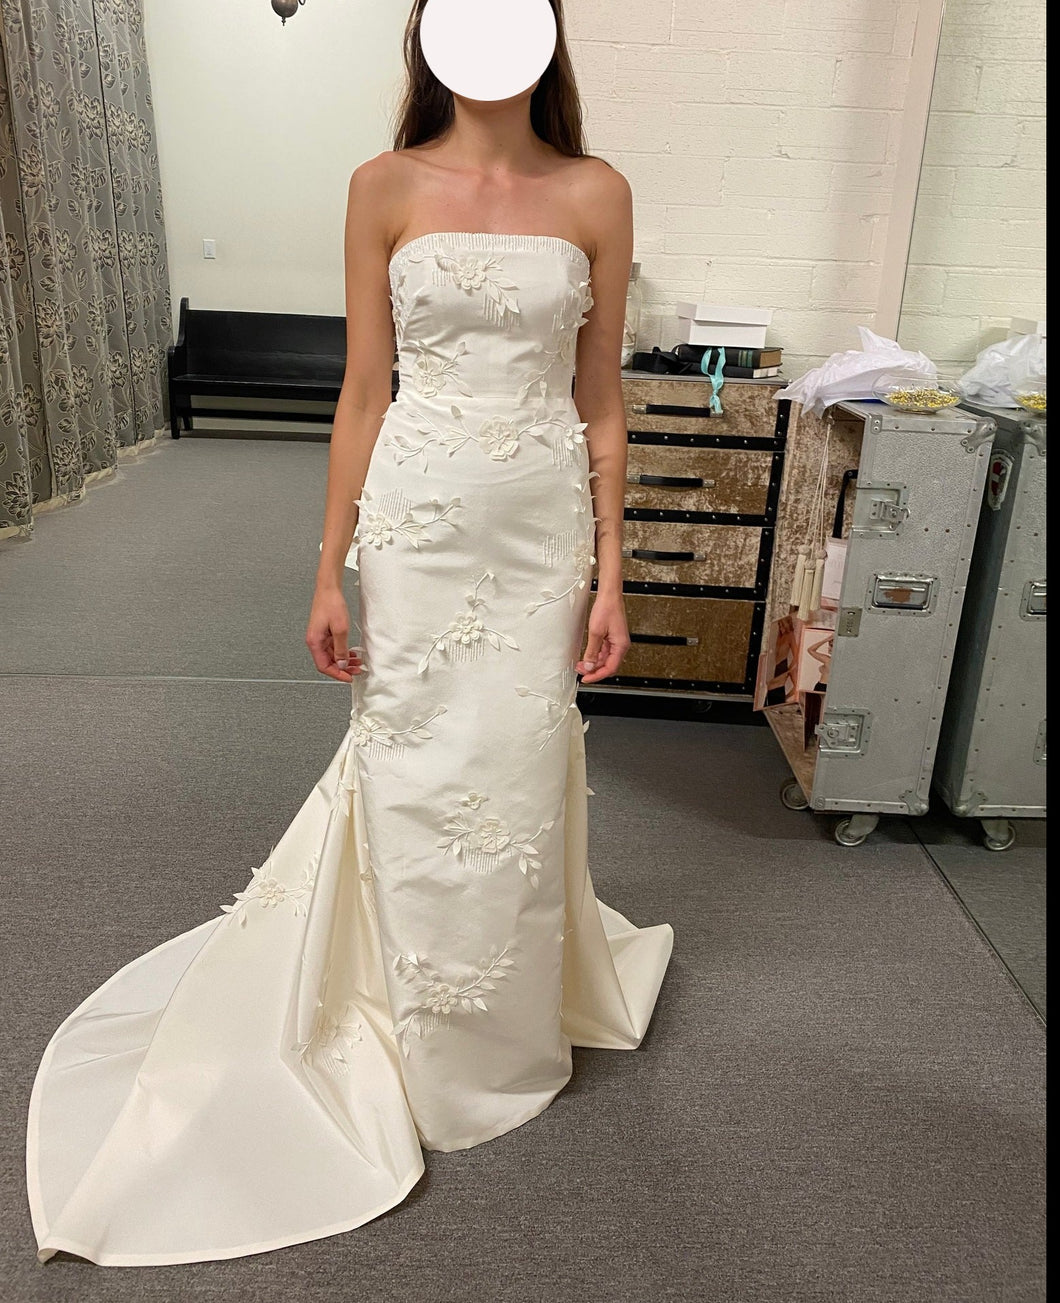 Lela Rose 'The Camden ' wedding dress size-06 PREOWNED